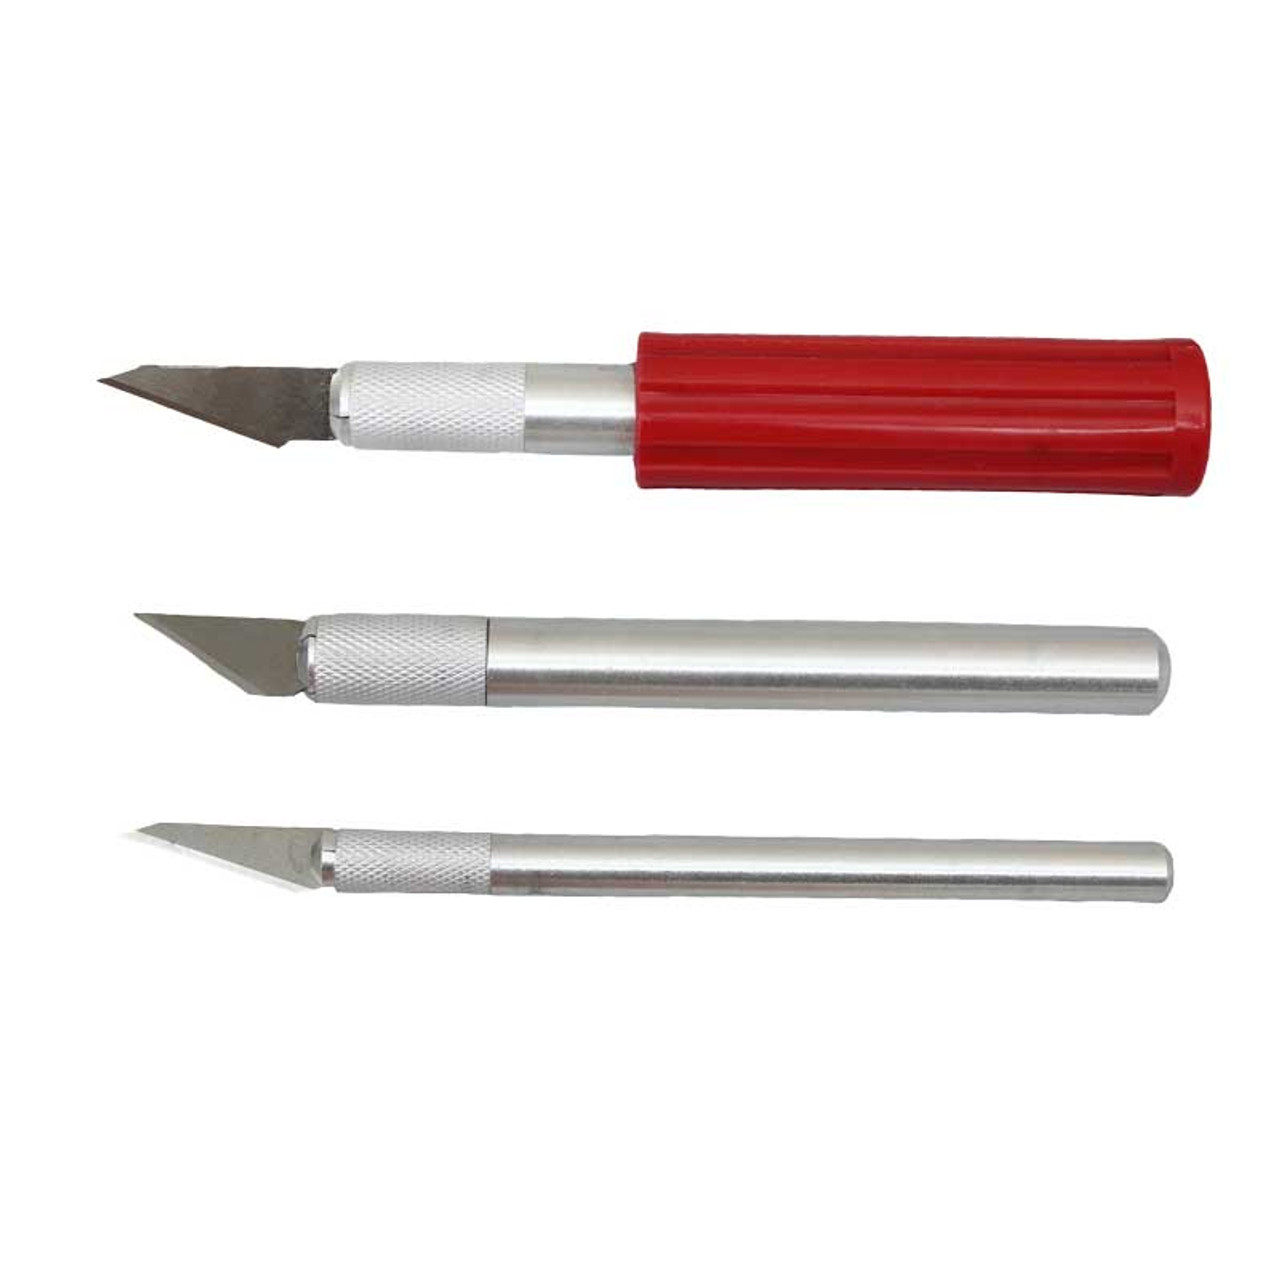 Precision Blades Hobby Knife, Precision Hobby Knife Set